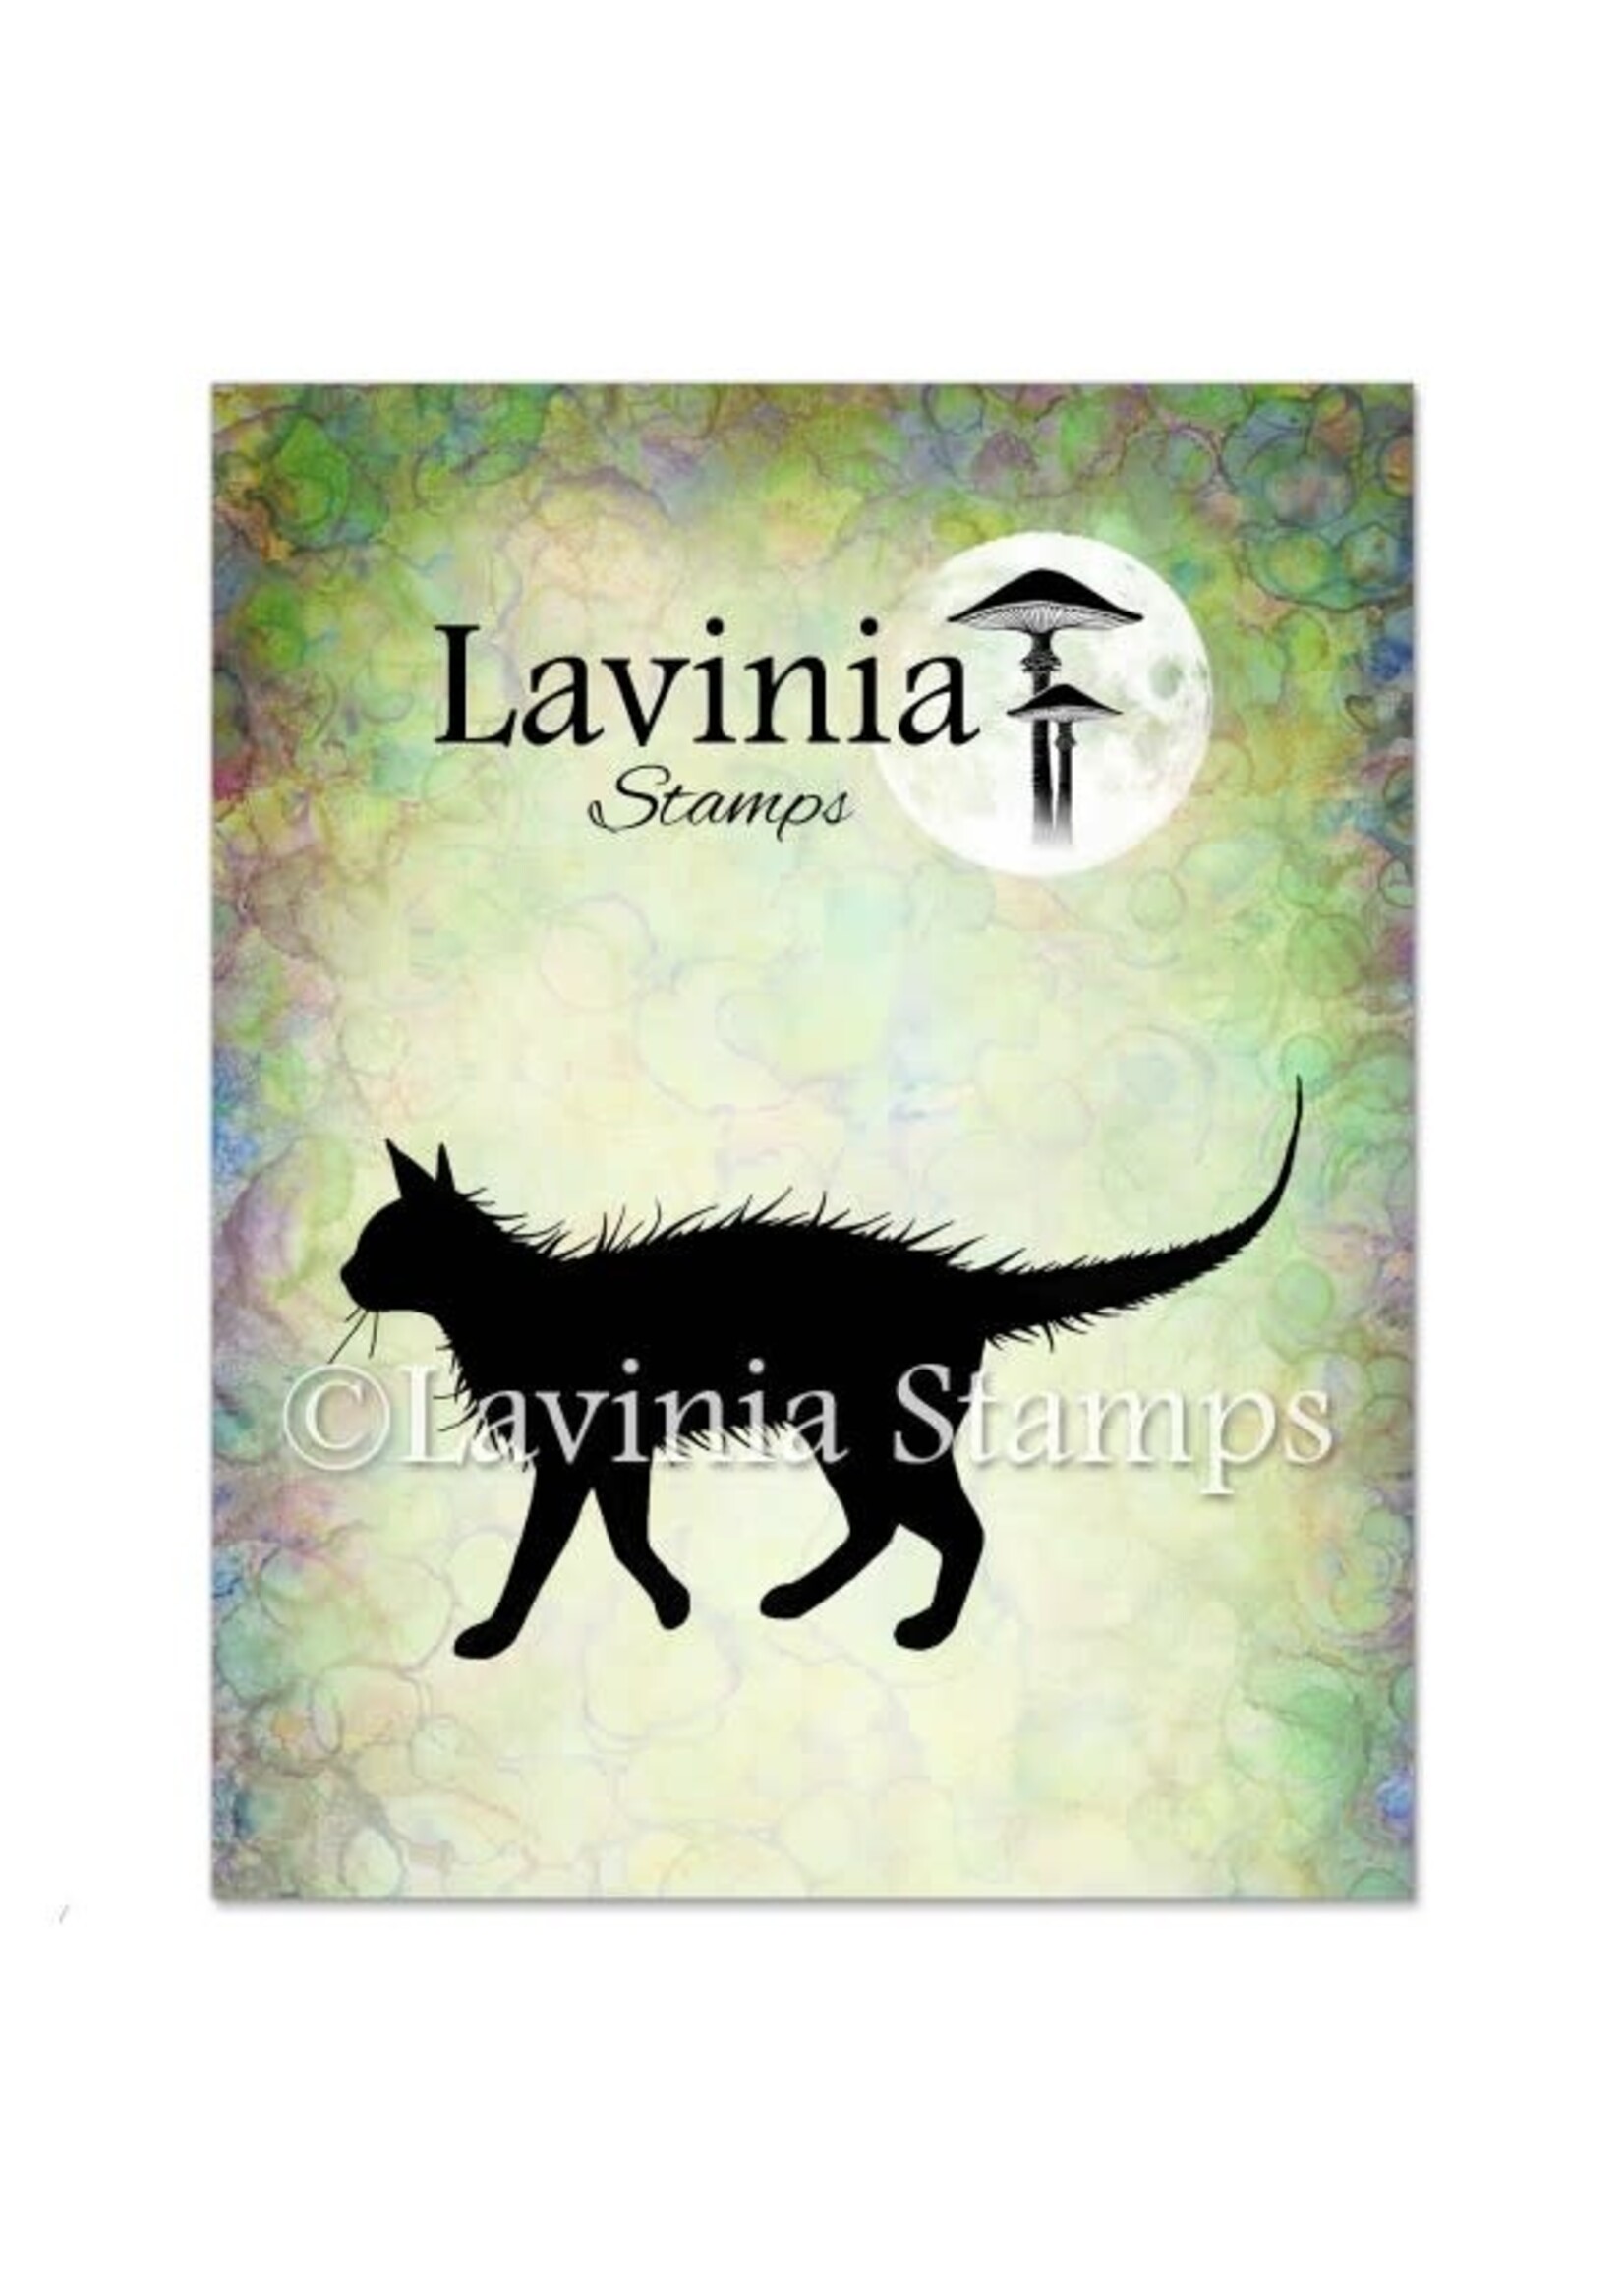 Lavinia Stamp, Mimsy